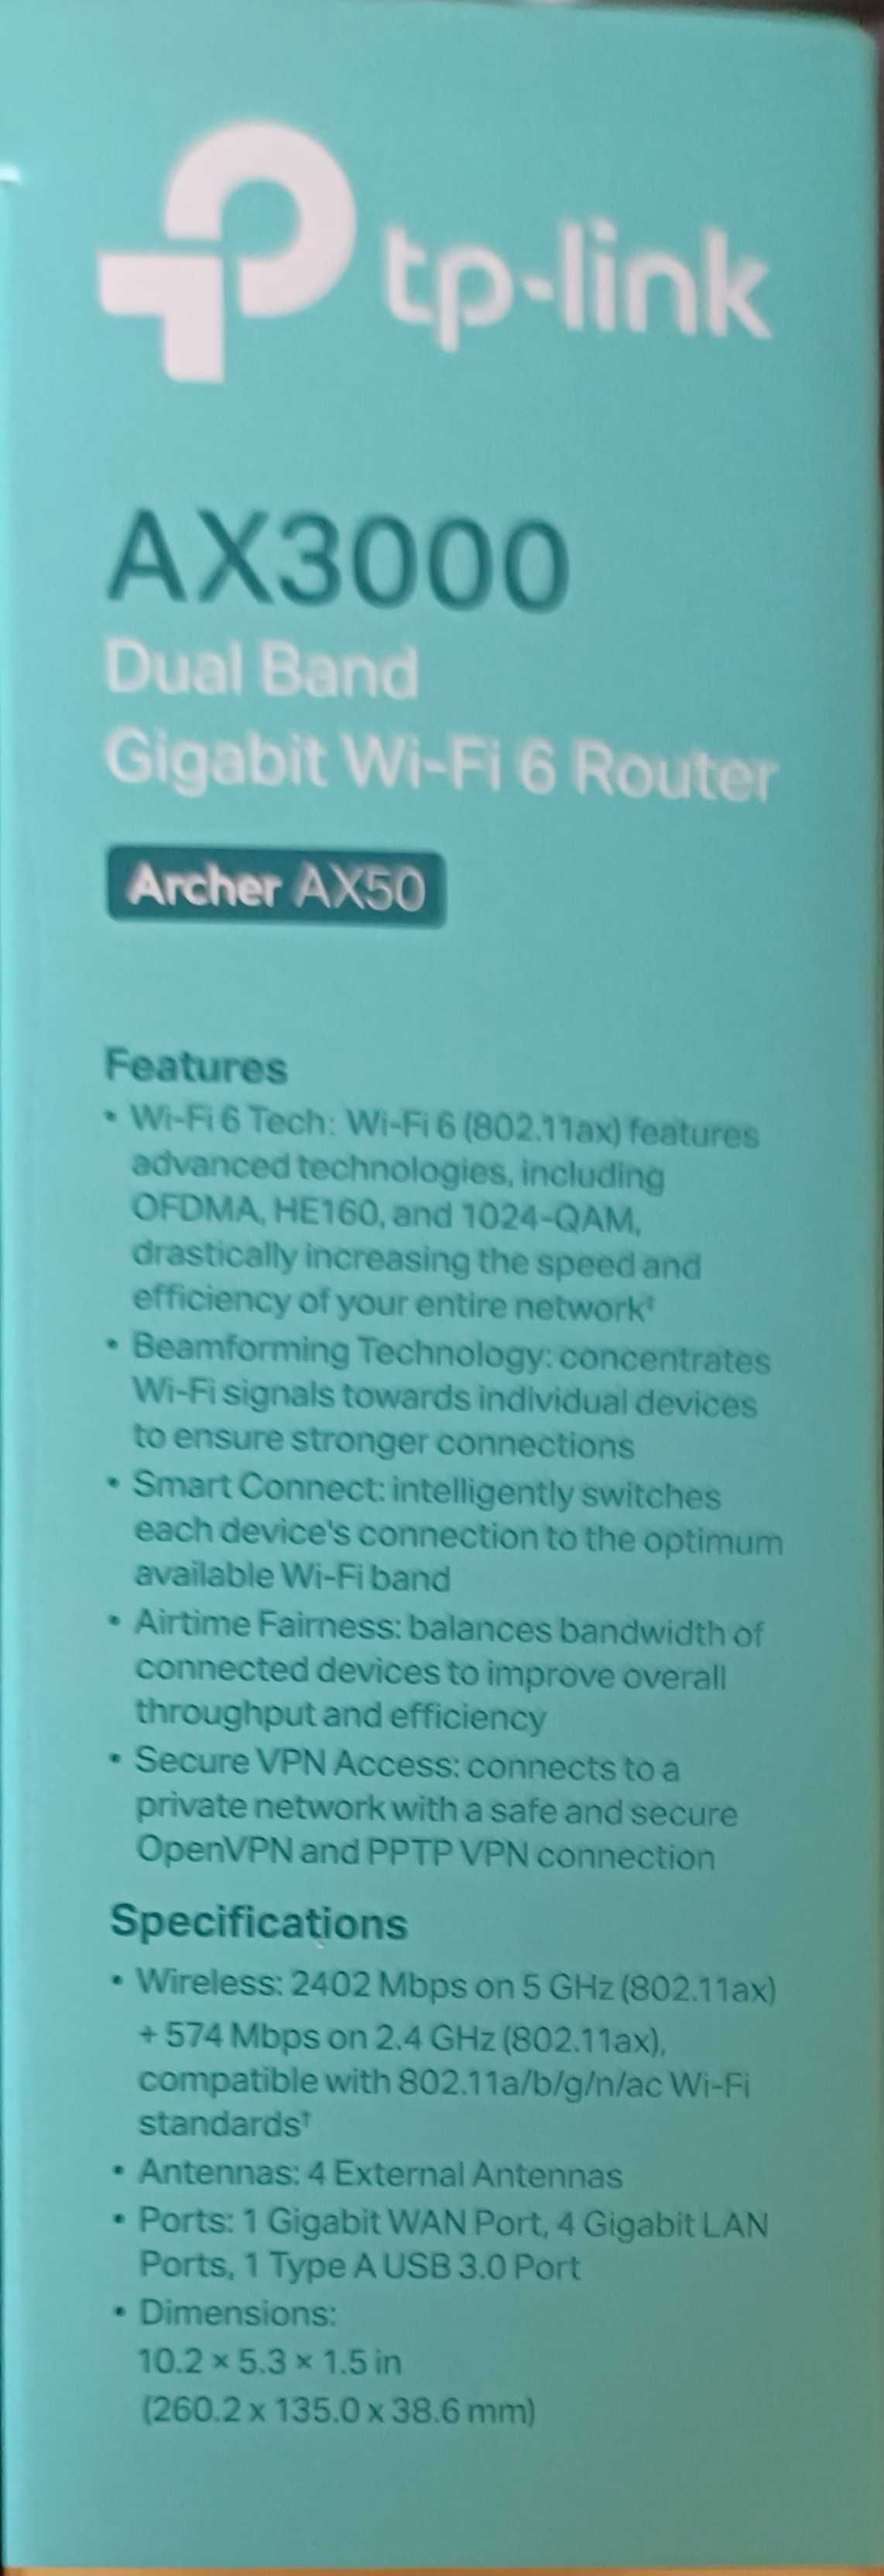 AX3000 router Archer AX50